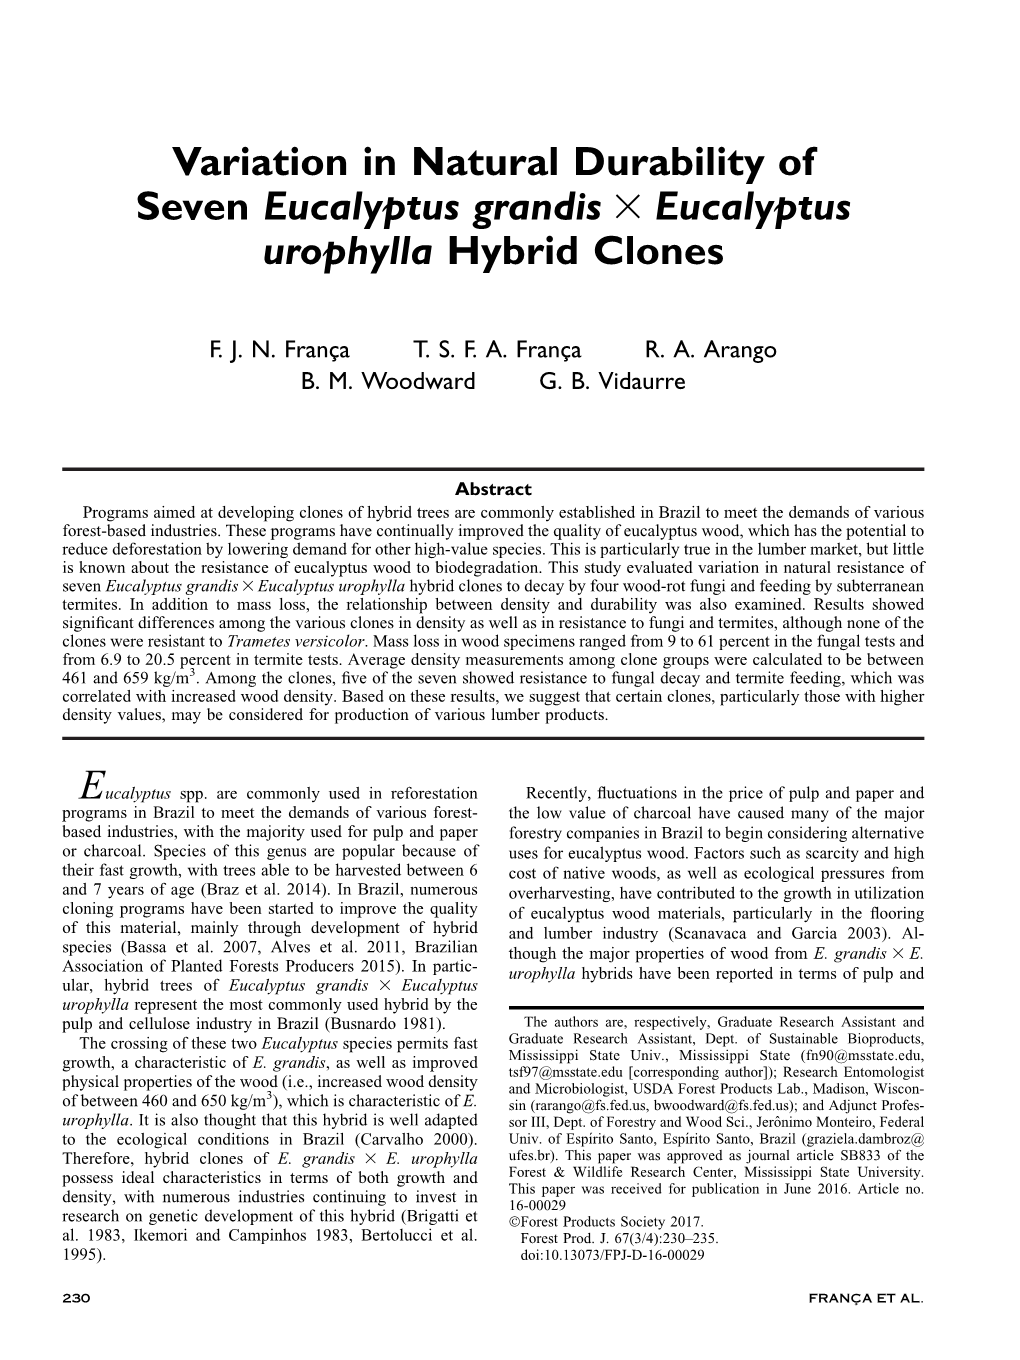 Variation in Natural Durability of Seven Eucalyptus Grandis 3 Eucalyptus Urophylla Hybrid Clones